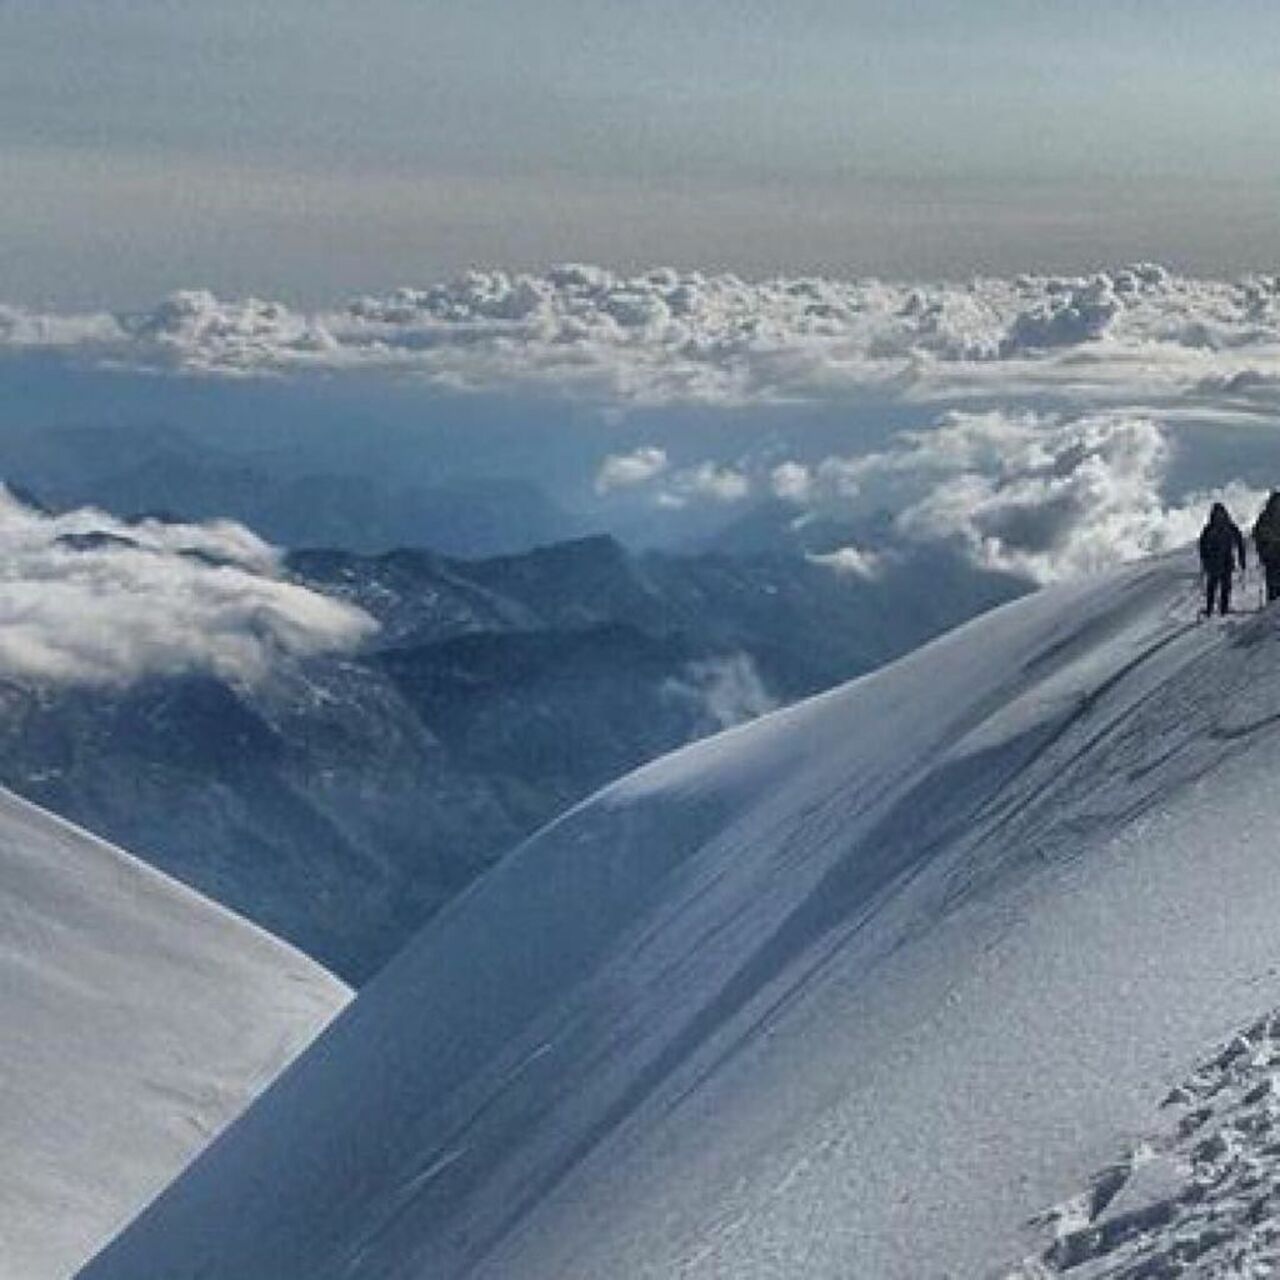 #Parrotspitze #4432

#alps #alpen #amazing #alpinism #adventure #climbing #inspiration #mo… http://ift.tt/20WA8EJ https://t.co/xzLk9LsZ6K